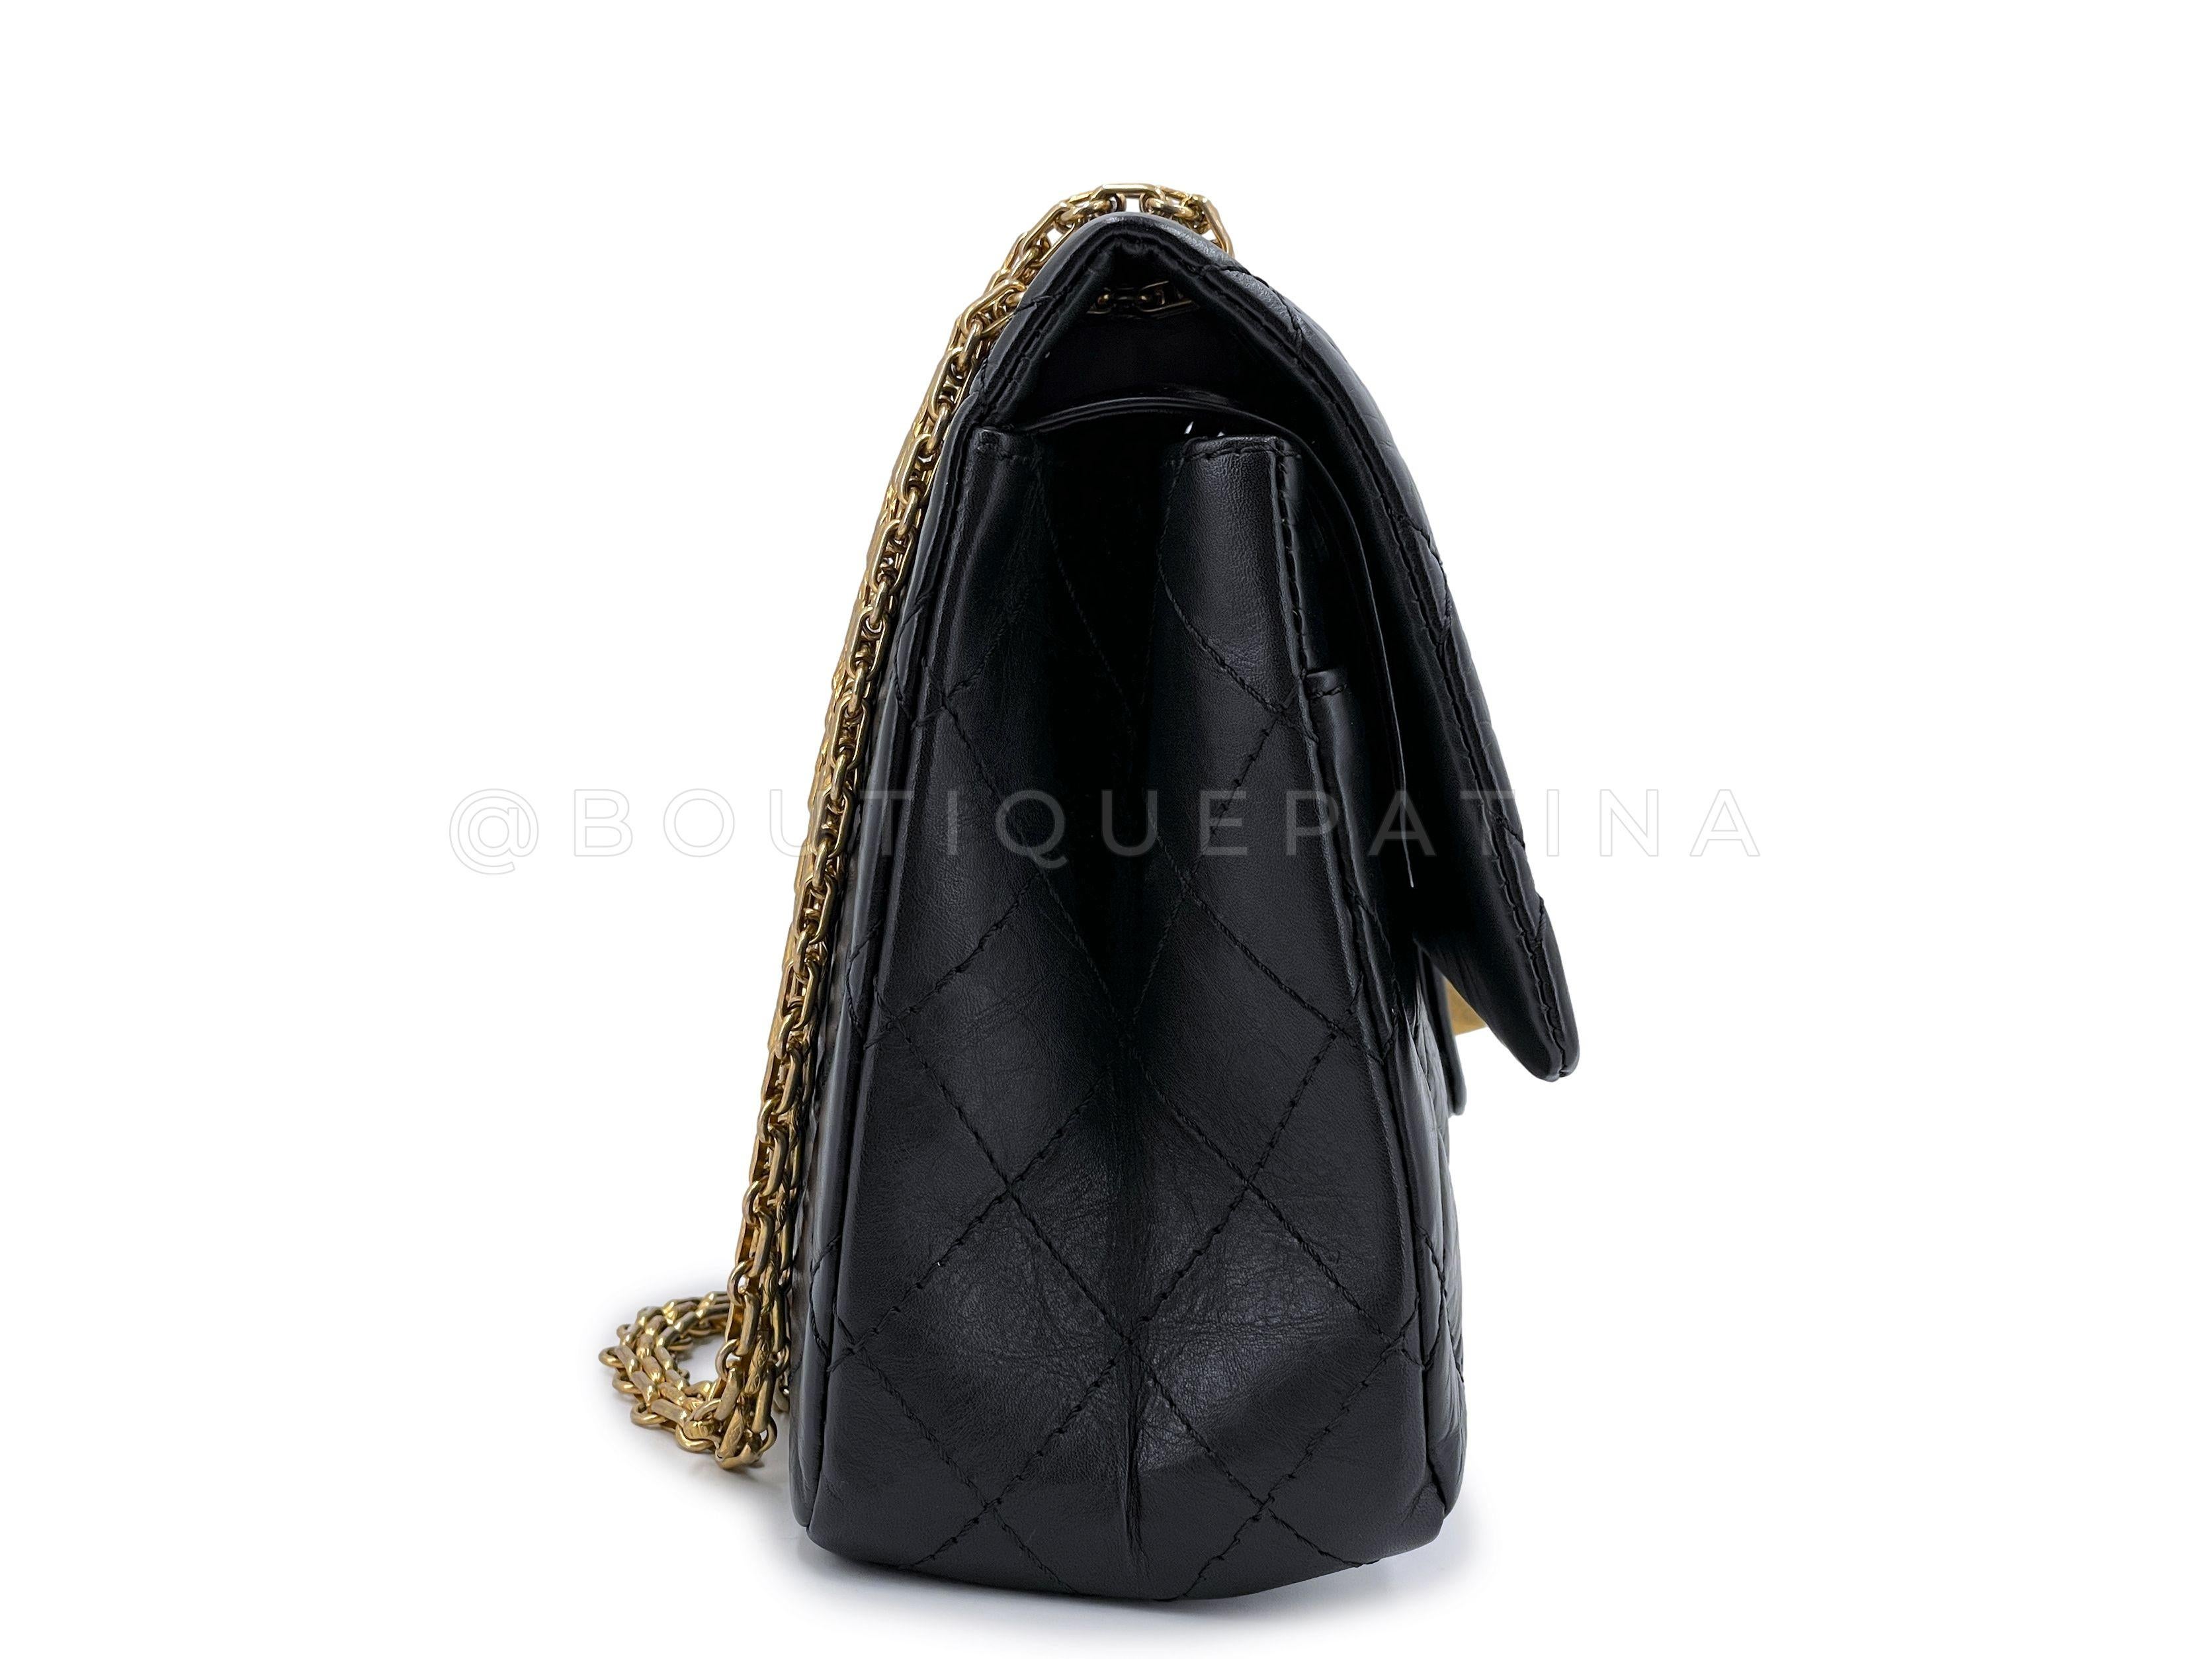 Women's Chanel Black Aged Calfskin Reissue Medium 226 2.55 Flap Bag GHW 66864 For Sale